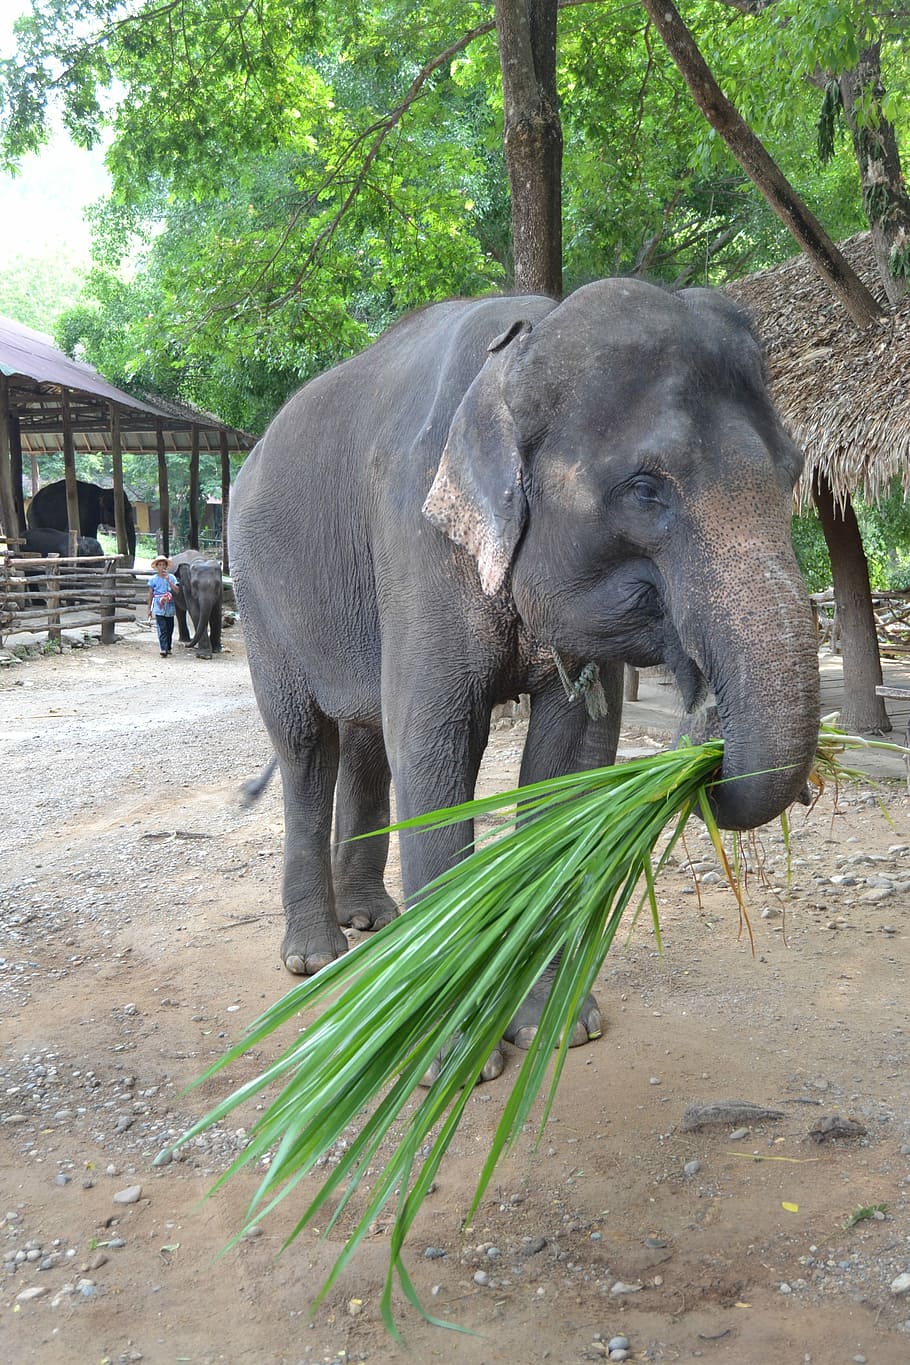 camp elephants, elephant, thailand, caregiver elephant, animals, caregiver, jungle, animal, nature, animal world